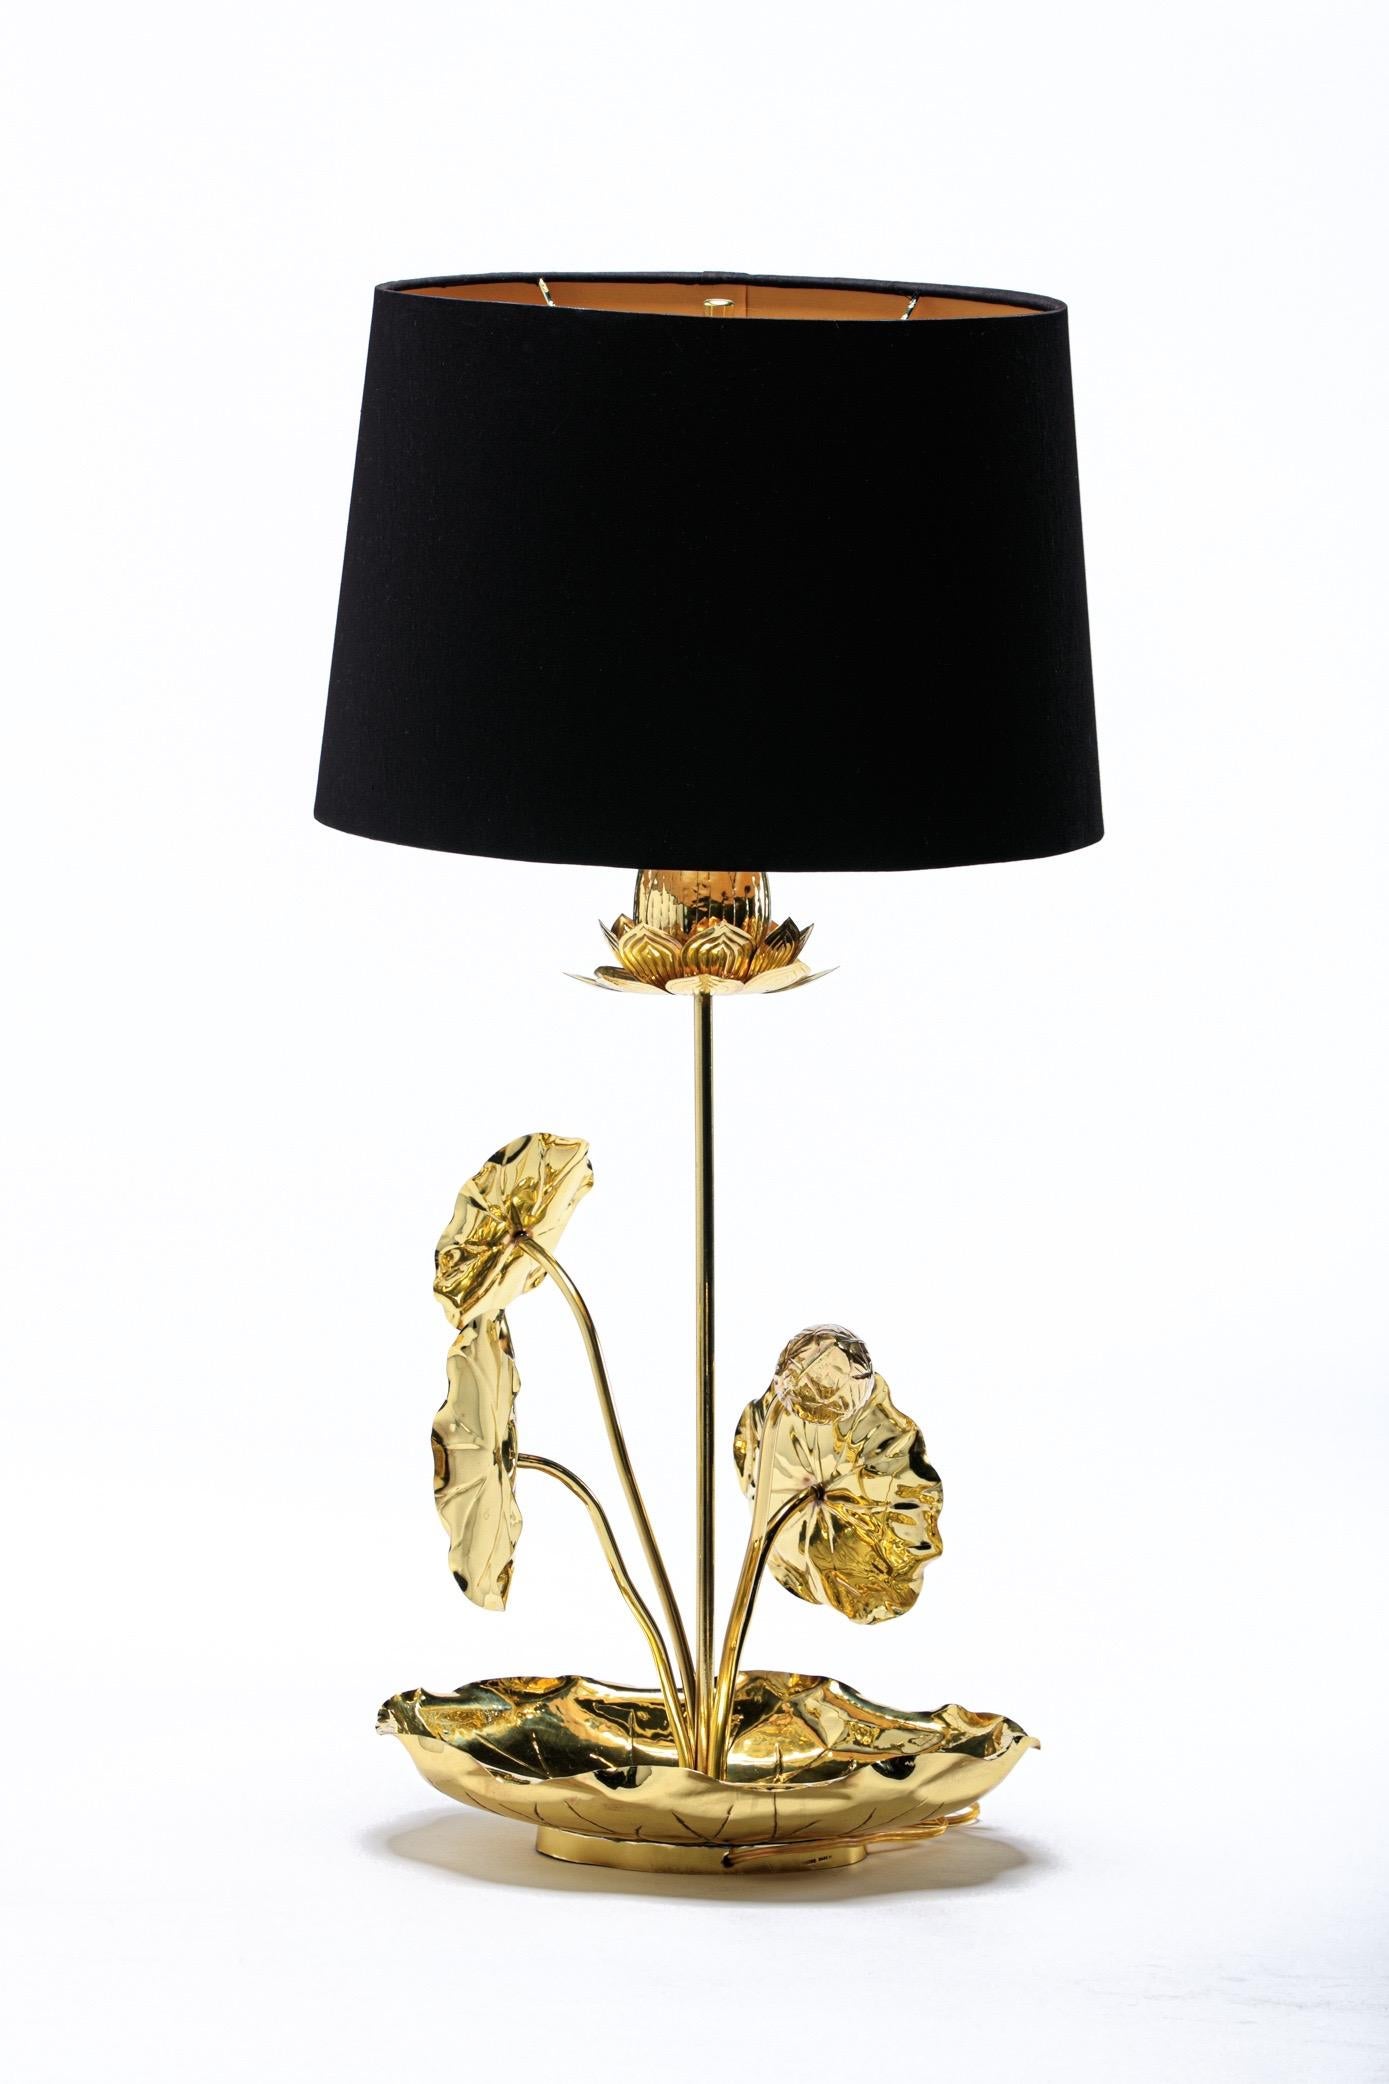 Hollywood Regency Lotus Flower Lamp in Polished Brass by Feldman c. 1960 For Sale 1